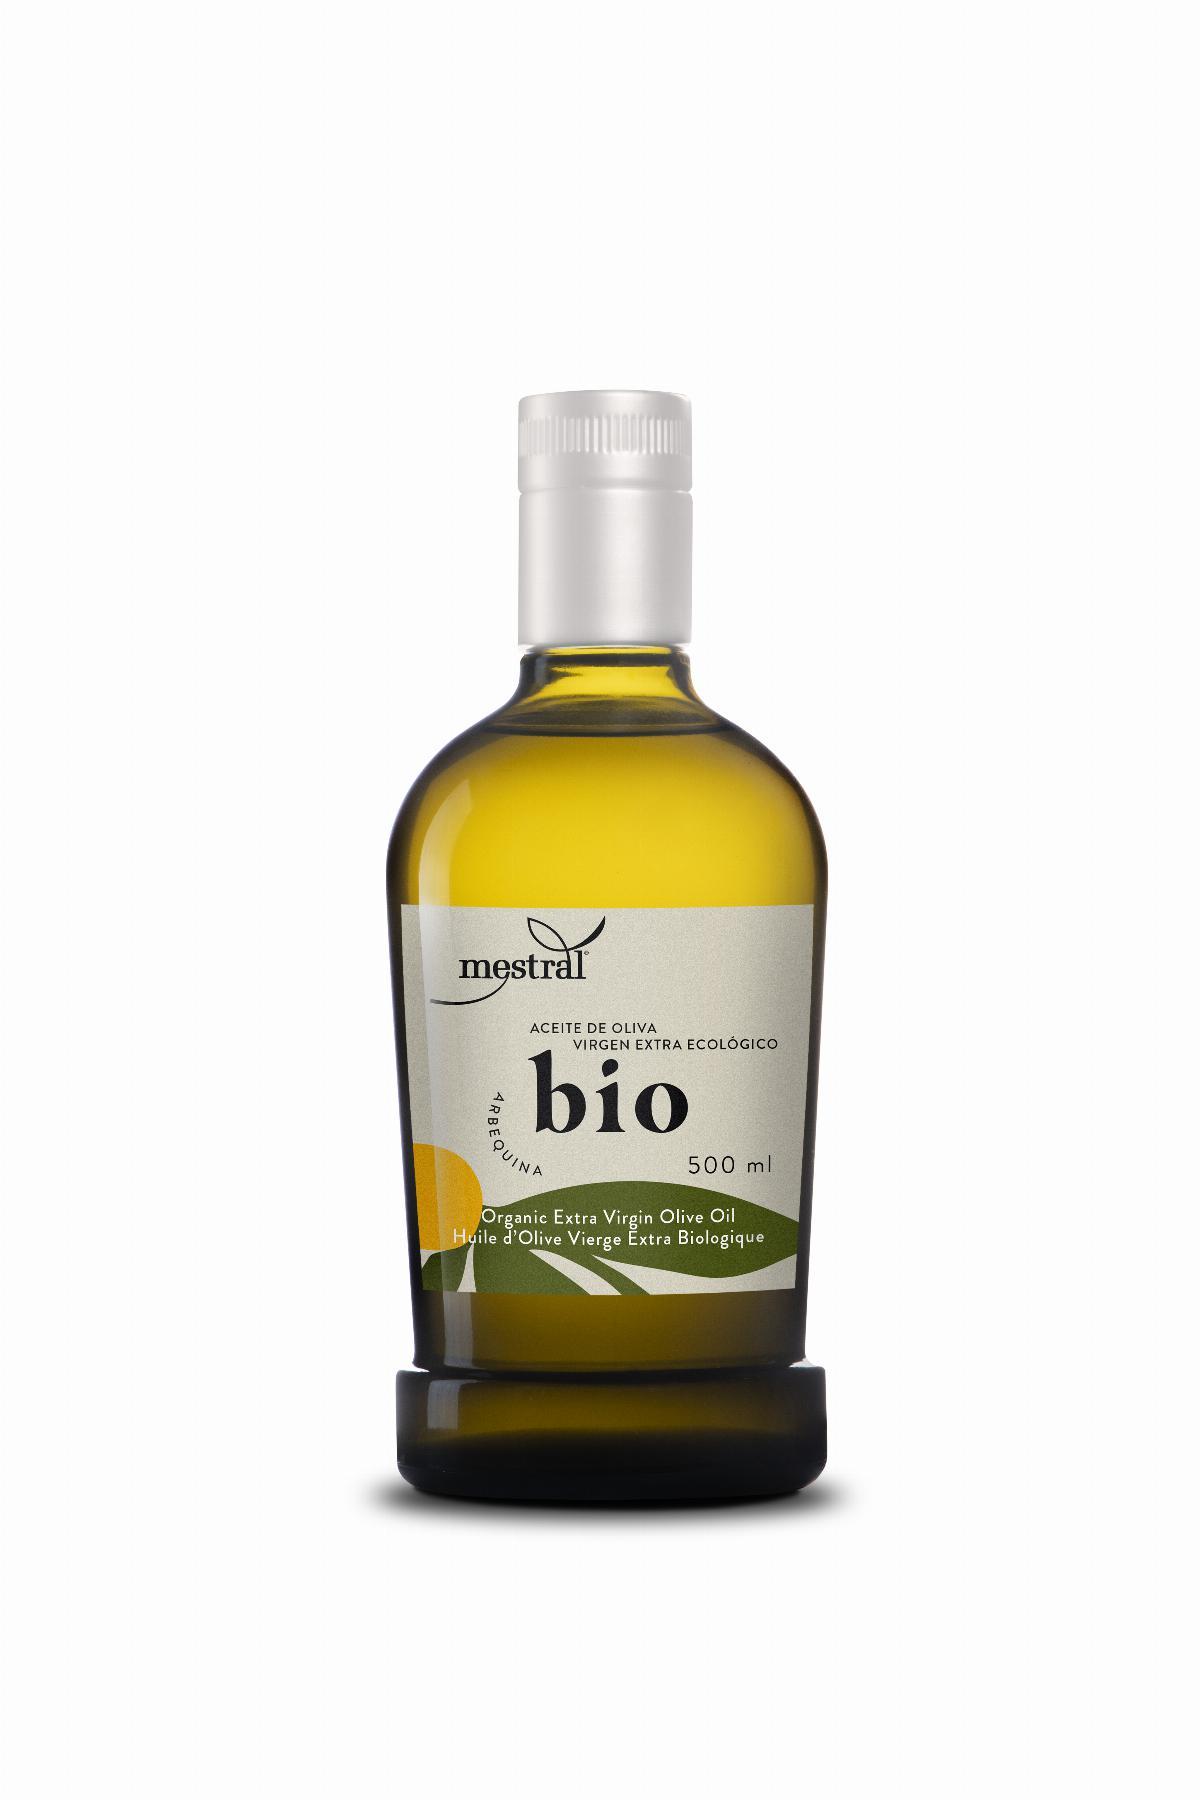 Oli d'oliva Verge Extra Mestral BIO agric ecològica amp.500mL 100% Arbequina